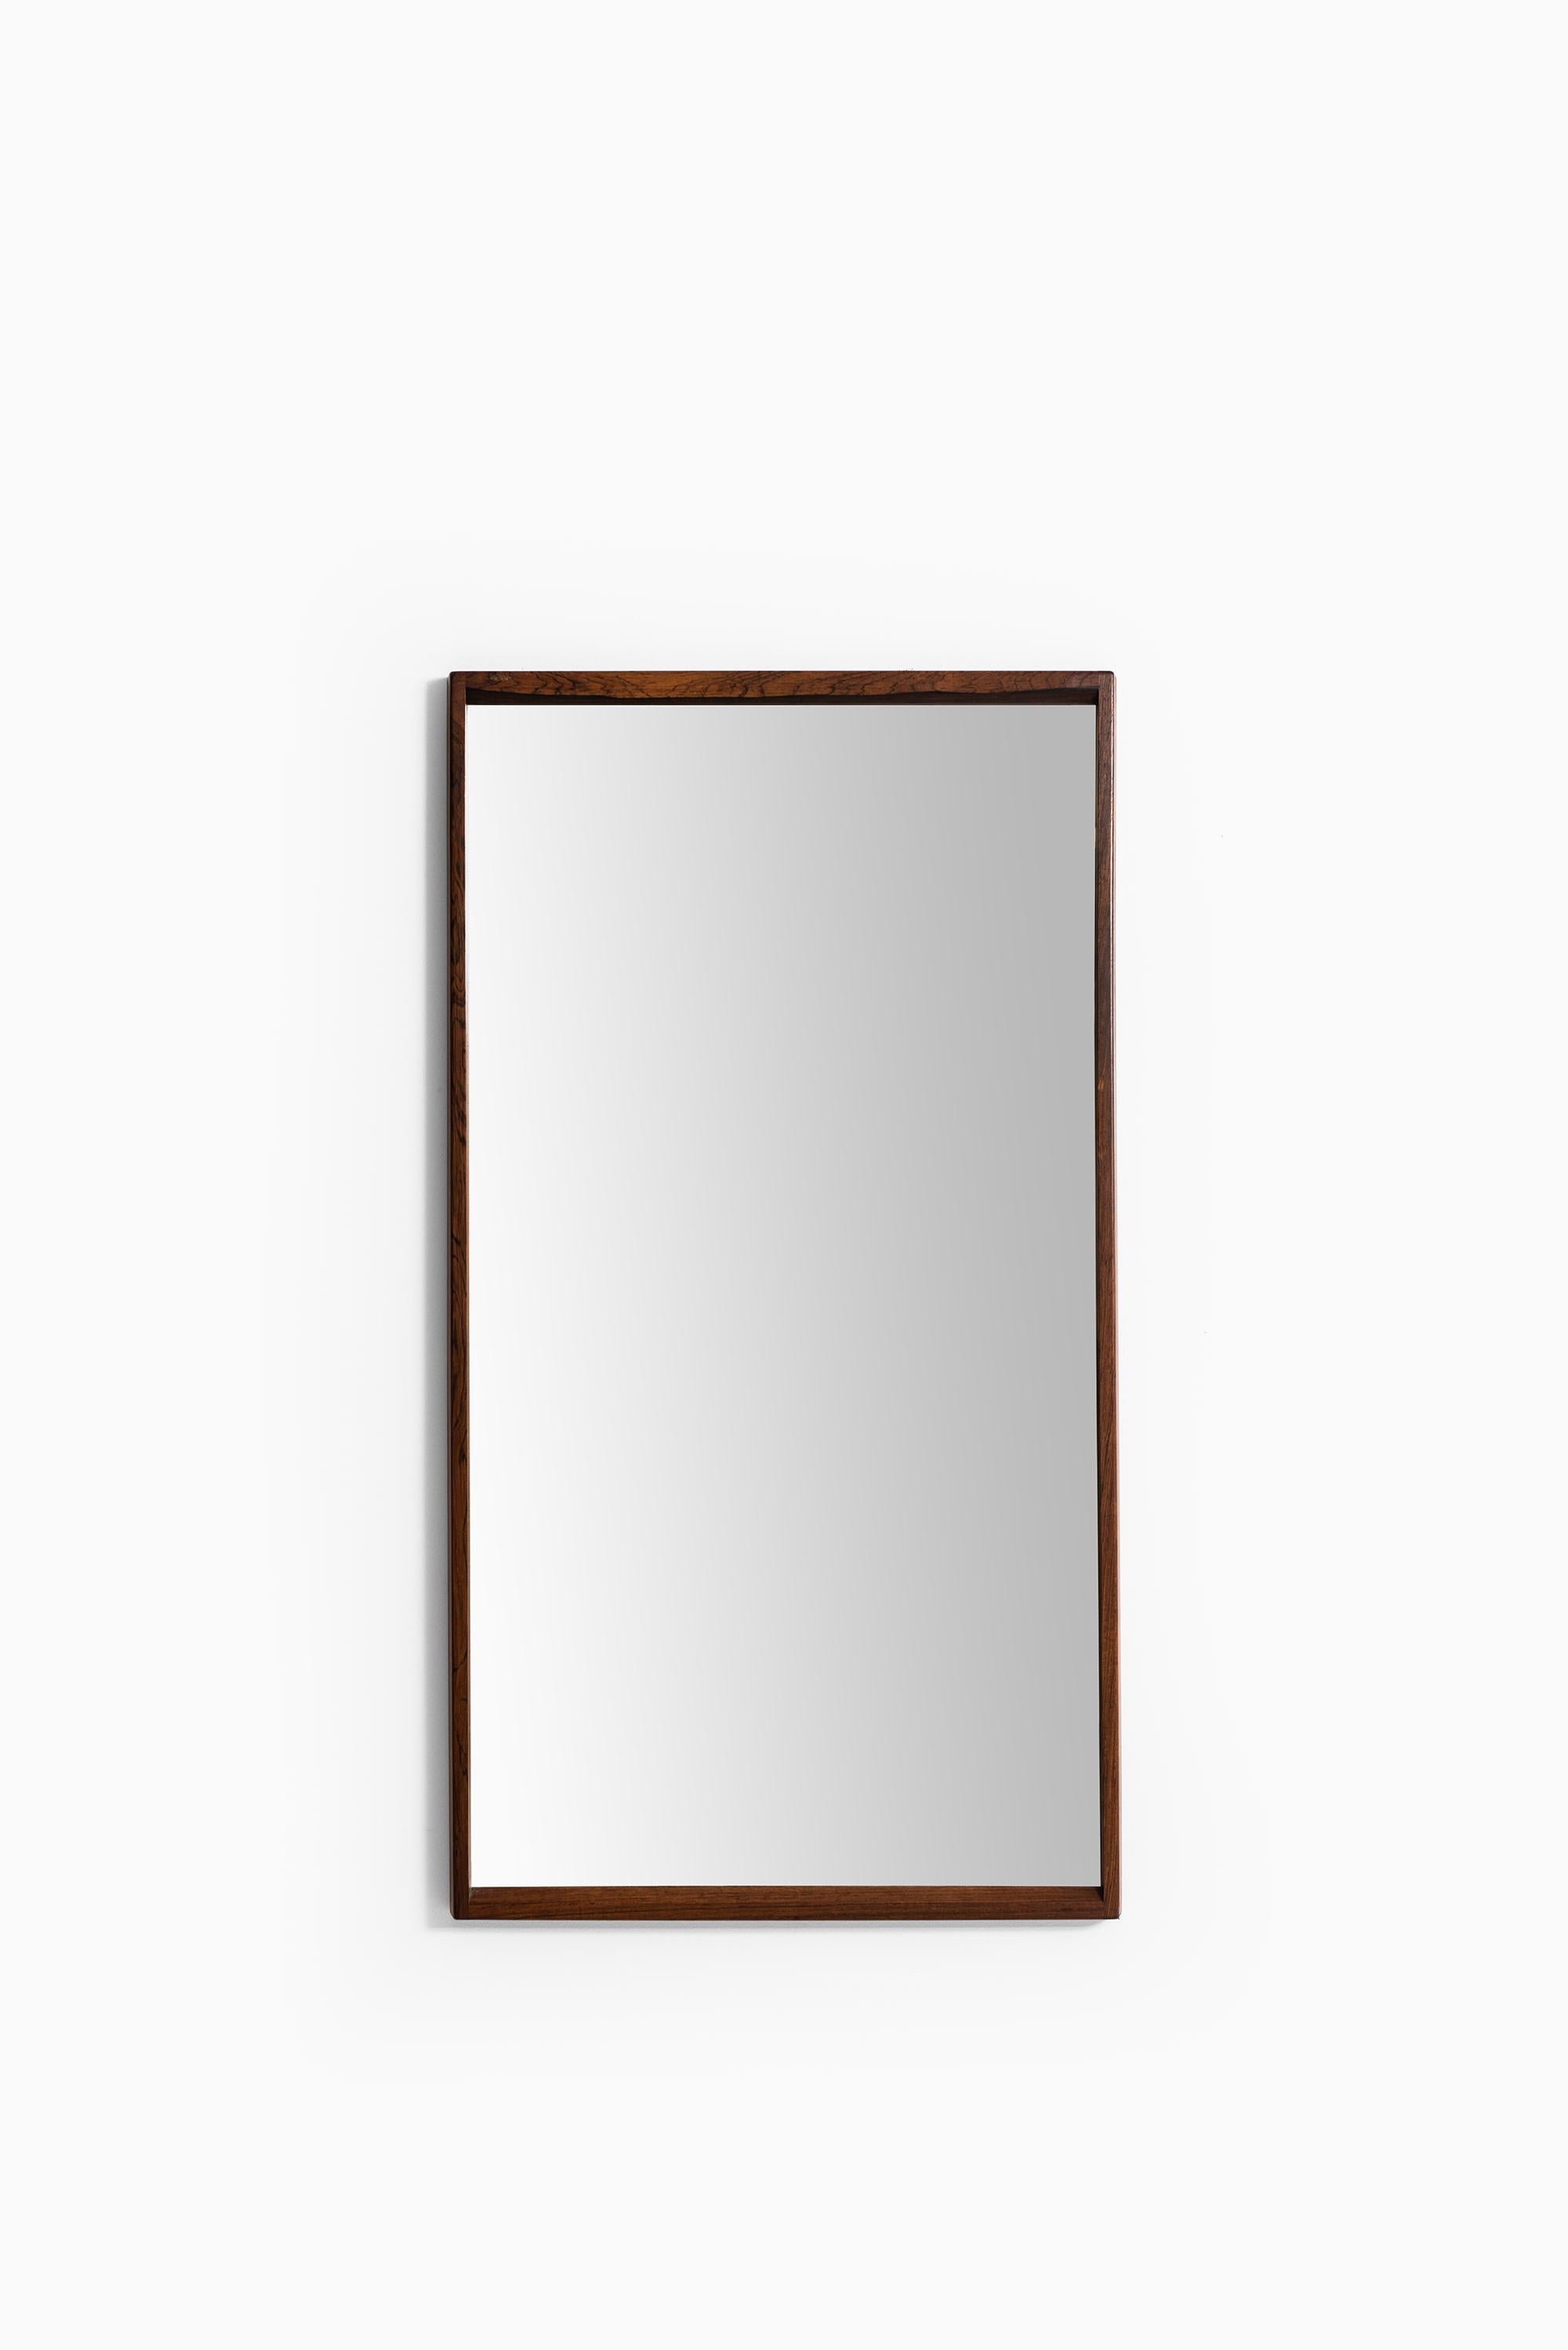 Mirror in rosewood designed by Aksel Kjersgaard. Produced by Odder in Denmark.